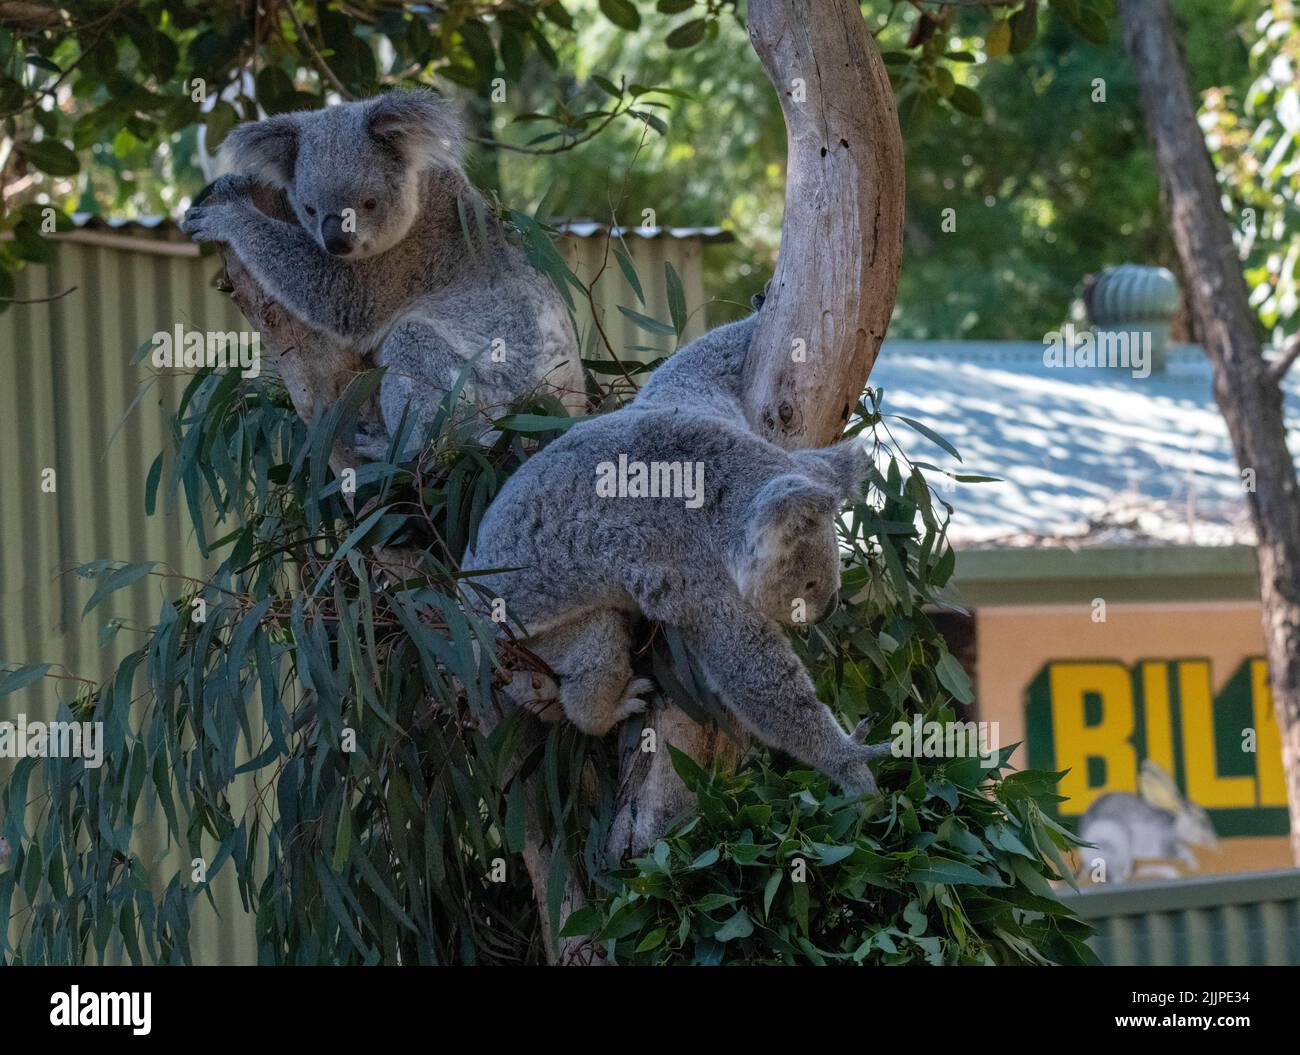 A pair of Koalas ( Phascolarctos cinereus) on a tree in Sydney, NSW, Australia (Photo by Tara Chand Malhotra) Stock Photo